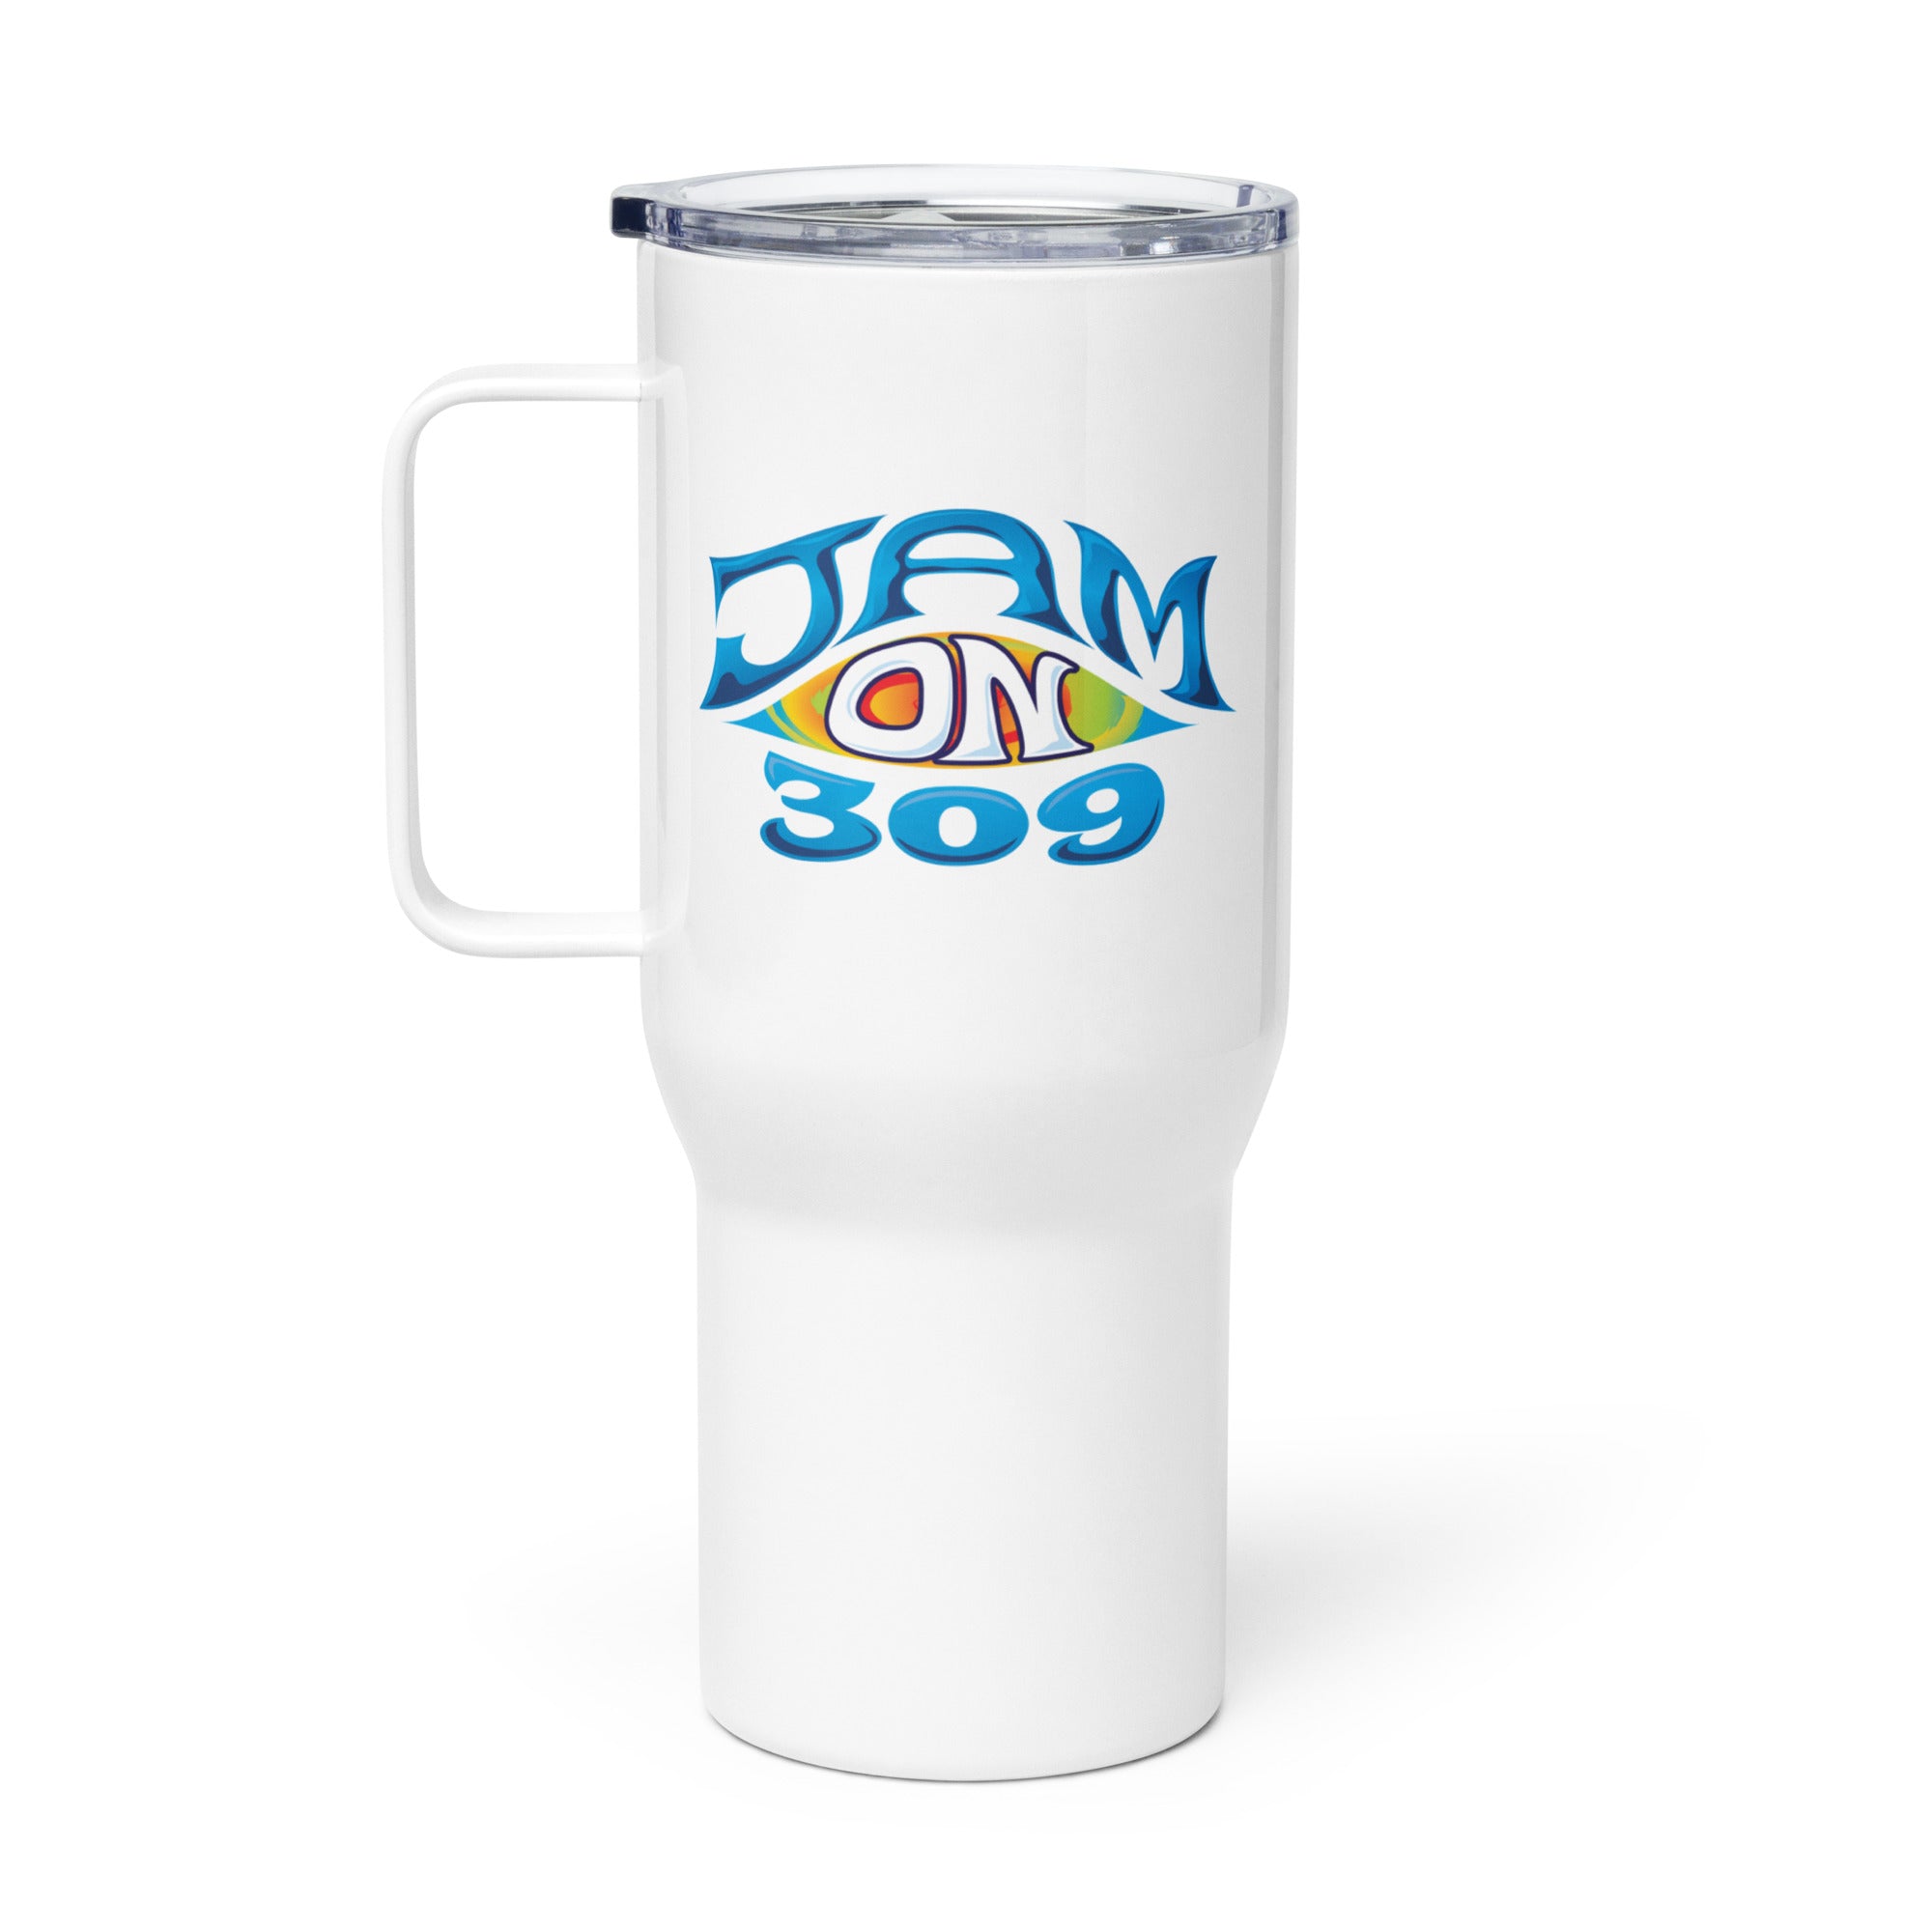 Jam on 309: Travel Mug